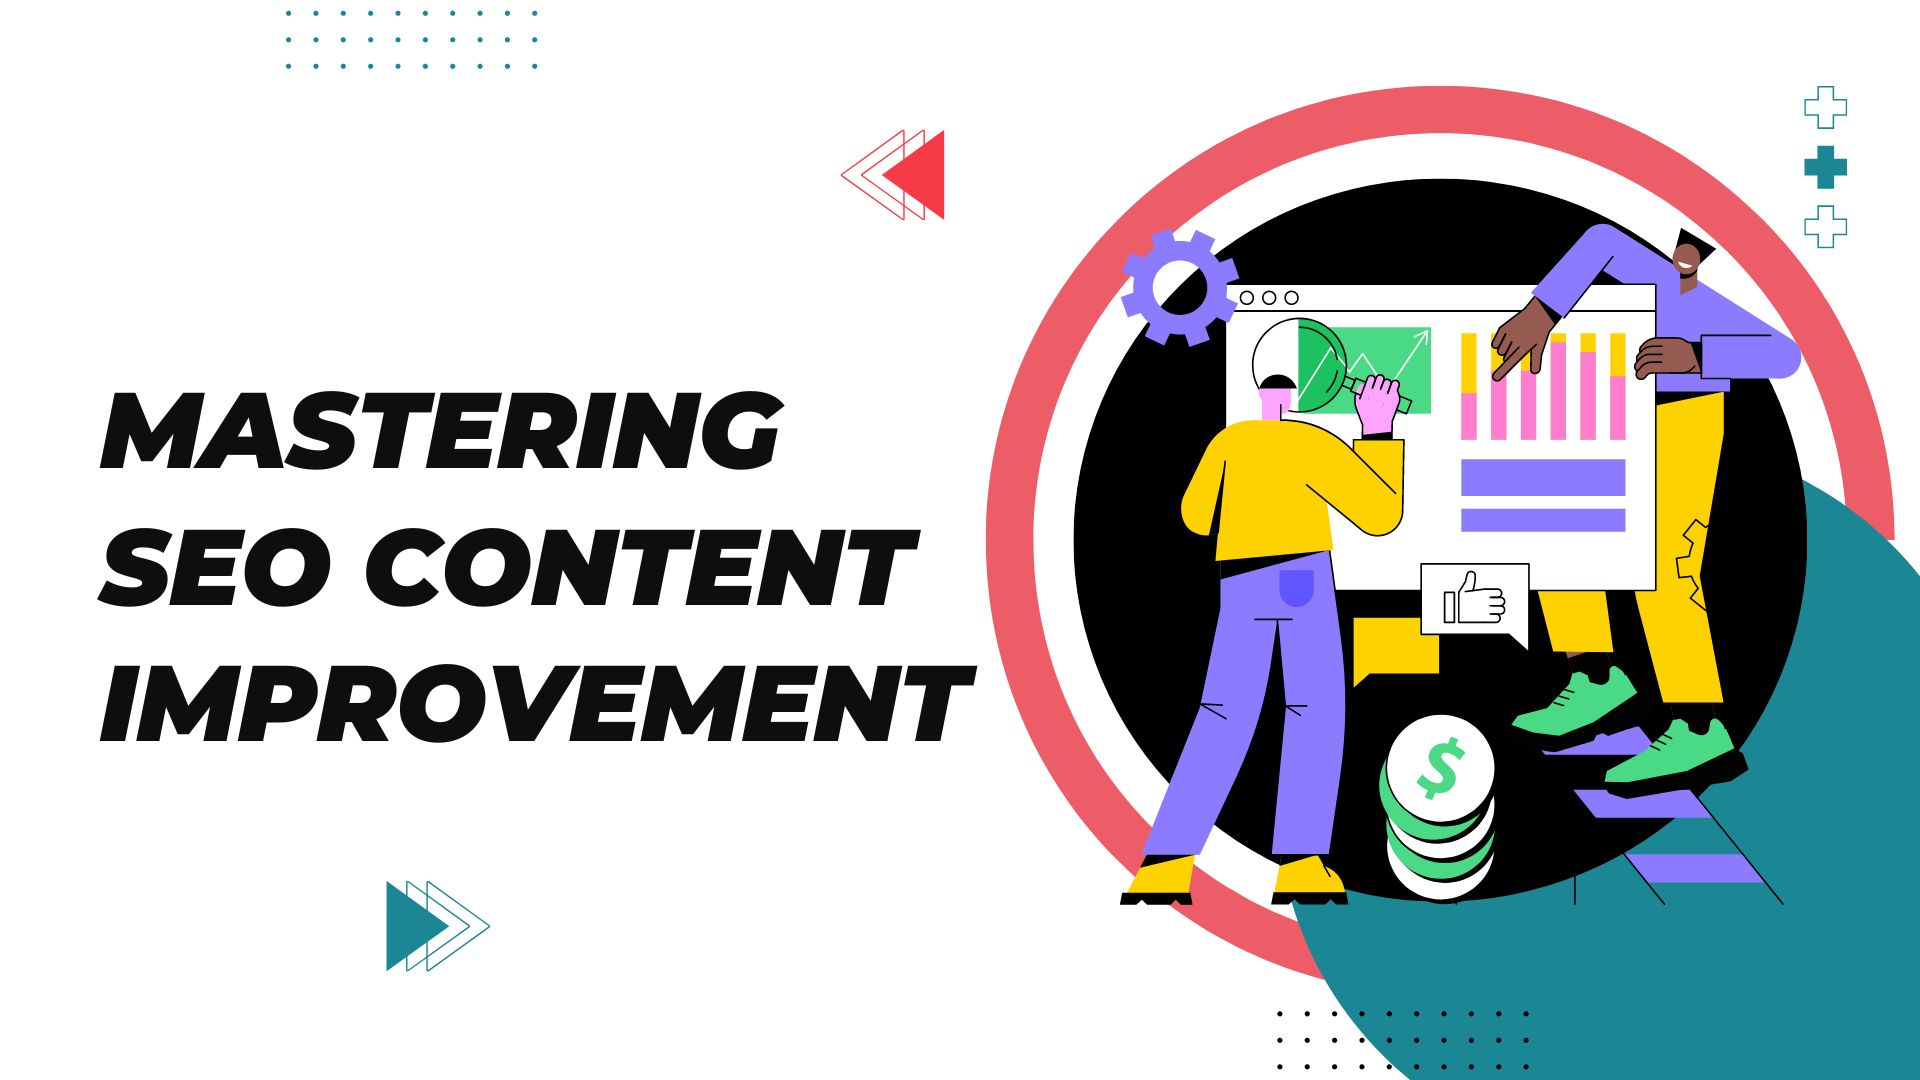 Mastering SEO Content Improvement - High-Ranking Content Strategies